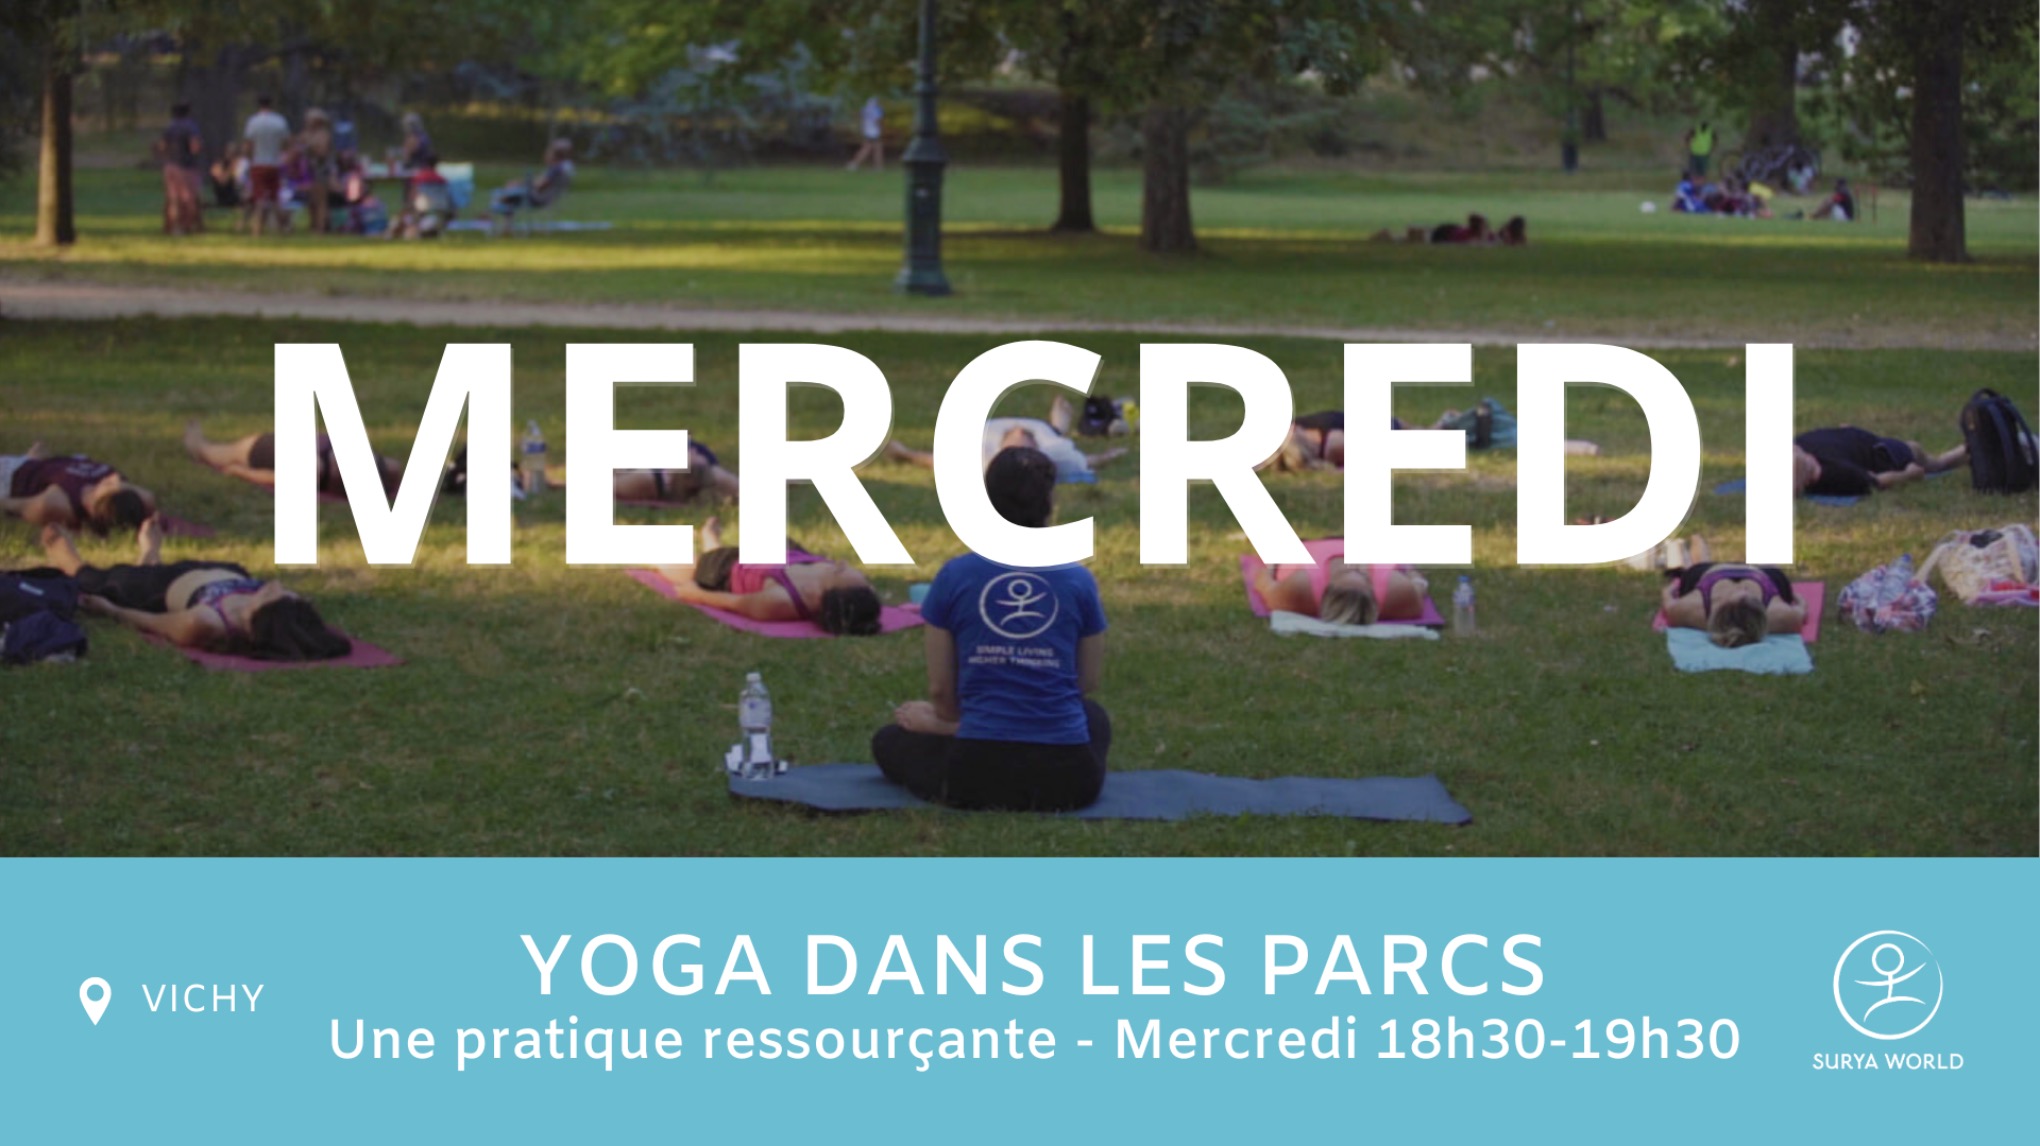 Yoga en plein air 🧘🏽 Mercredi 18h30-19h30